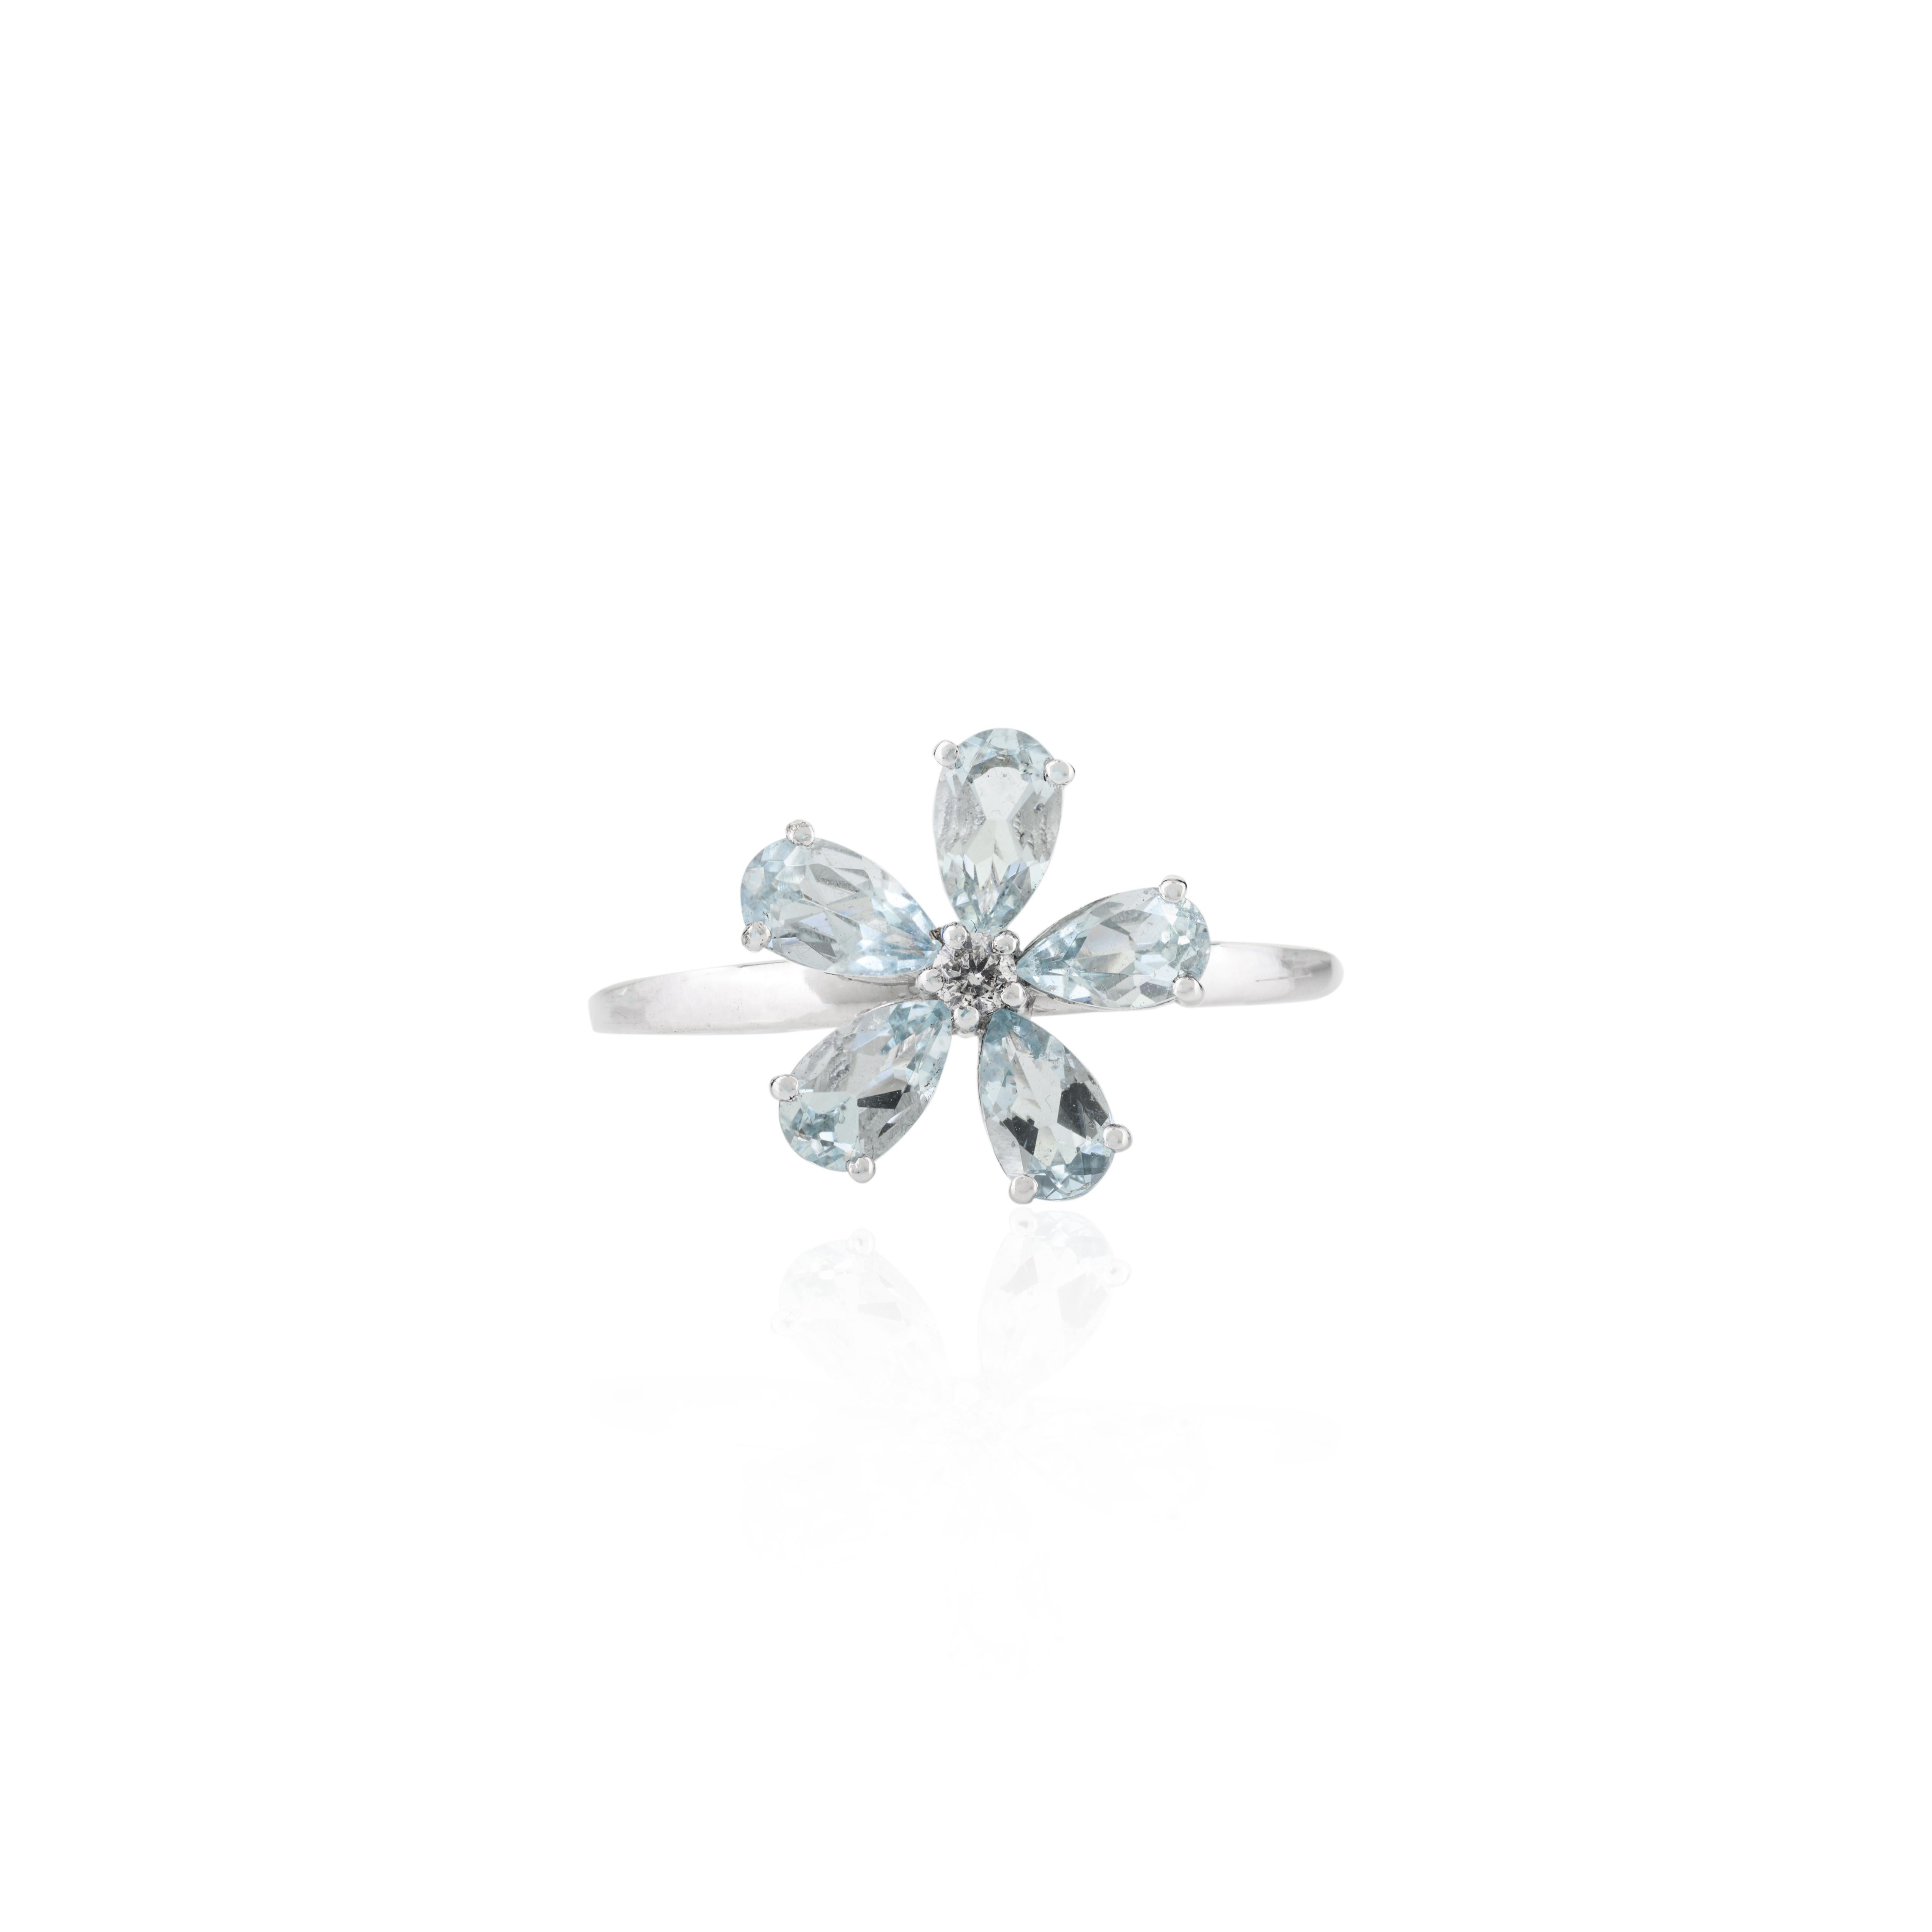 For Sale:  Natural Aquamarine Diamond Spring Flower Ring in 18k White Gold for Her 3